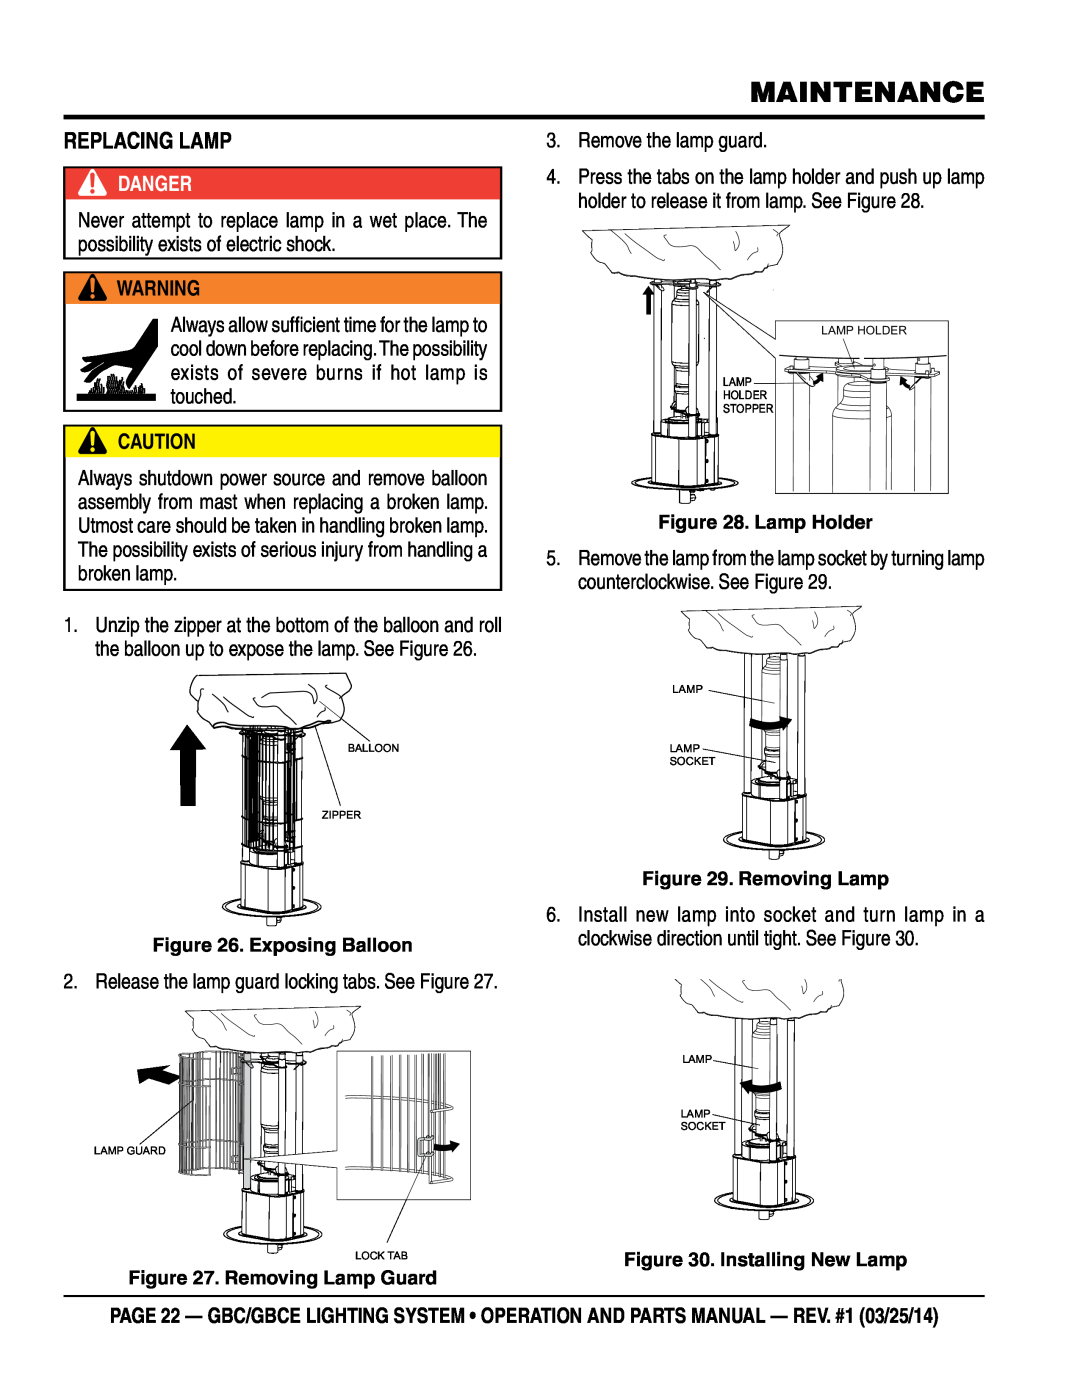 Multiquip gbe/gbce manual maintenance, Replacing Lamp, Caution, Danger 